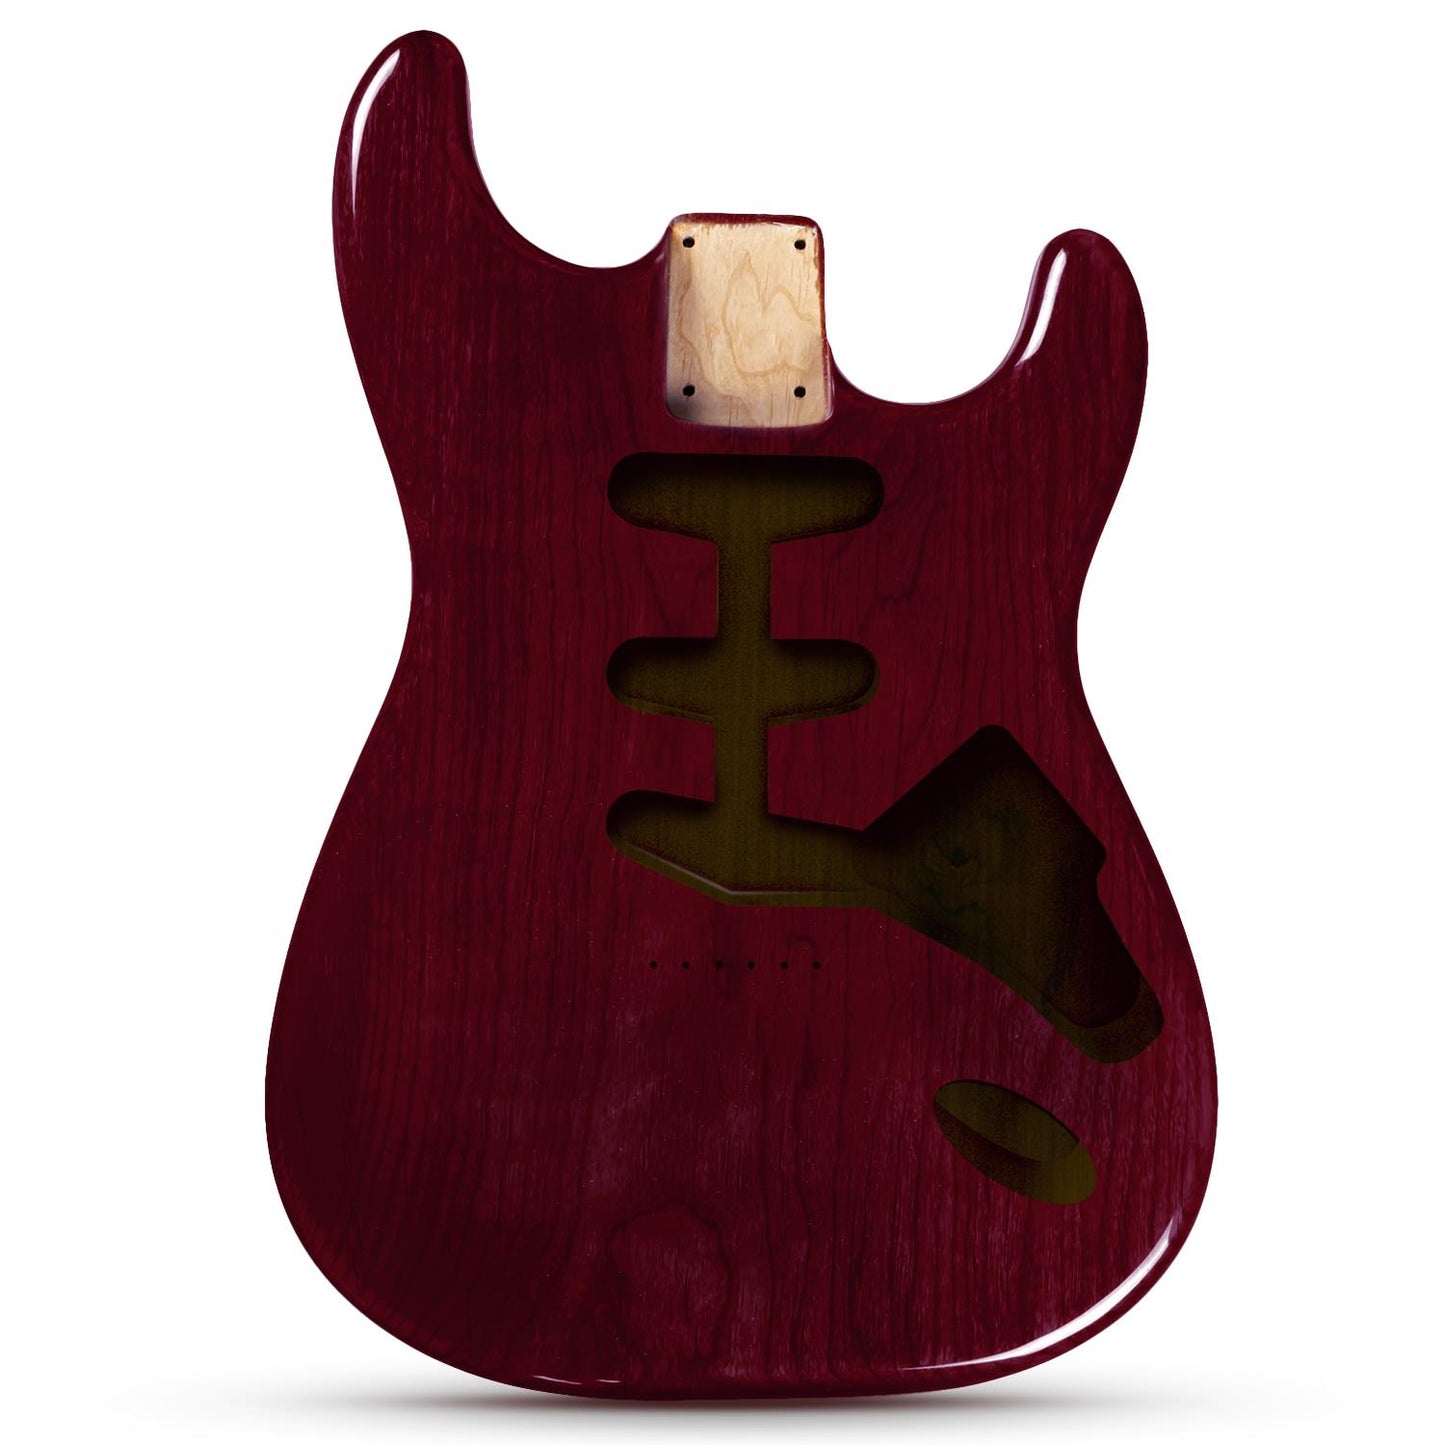 Wine Red Nitrocellulose Guitar Paint / Lacquer Aerosol - 400ml